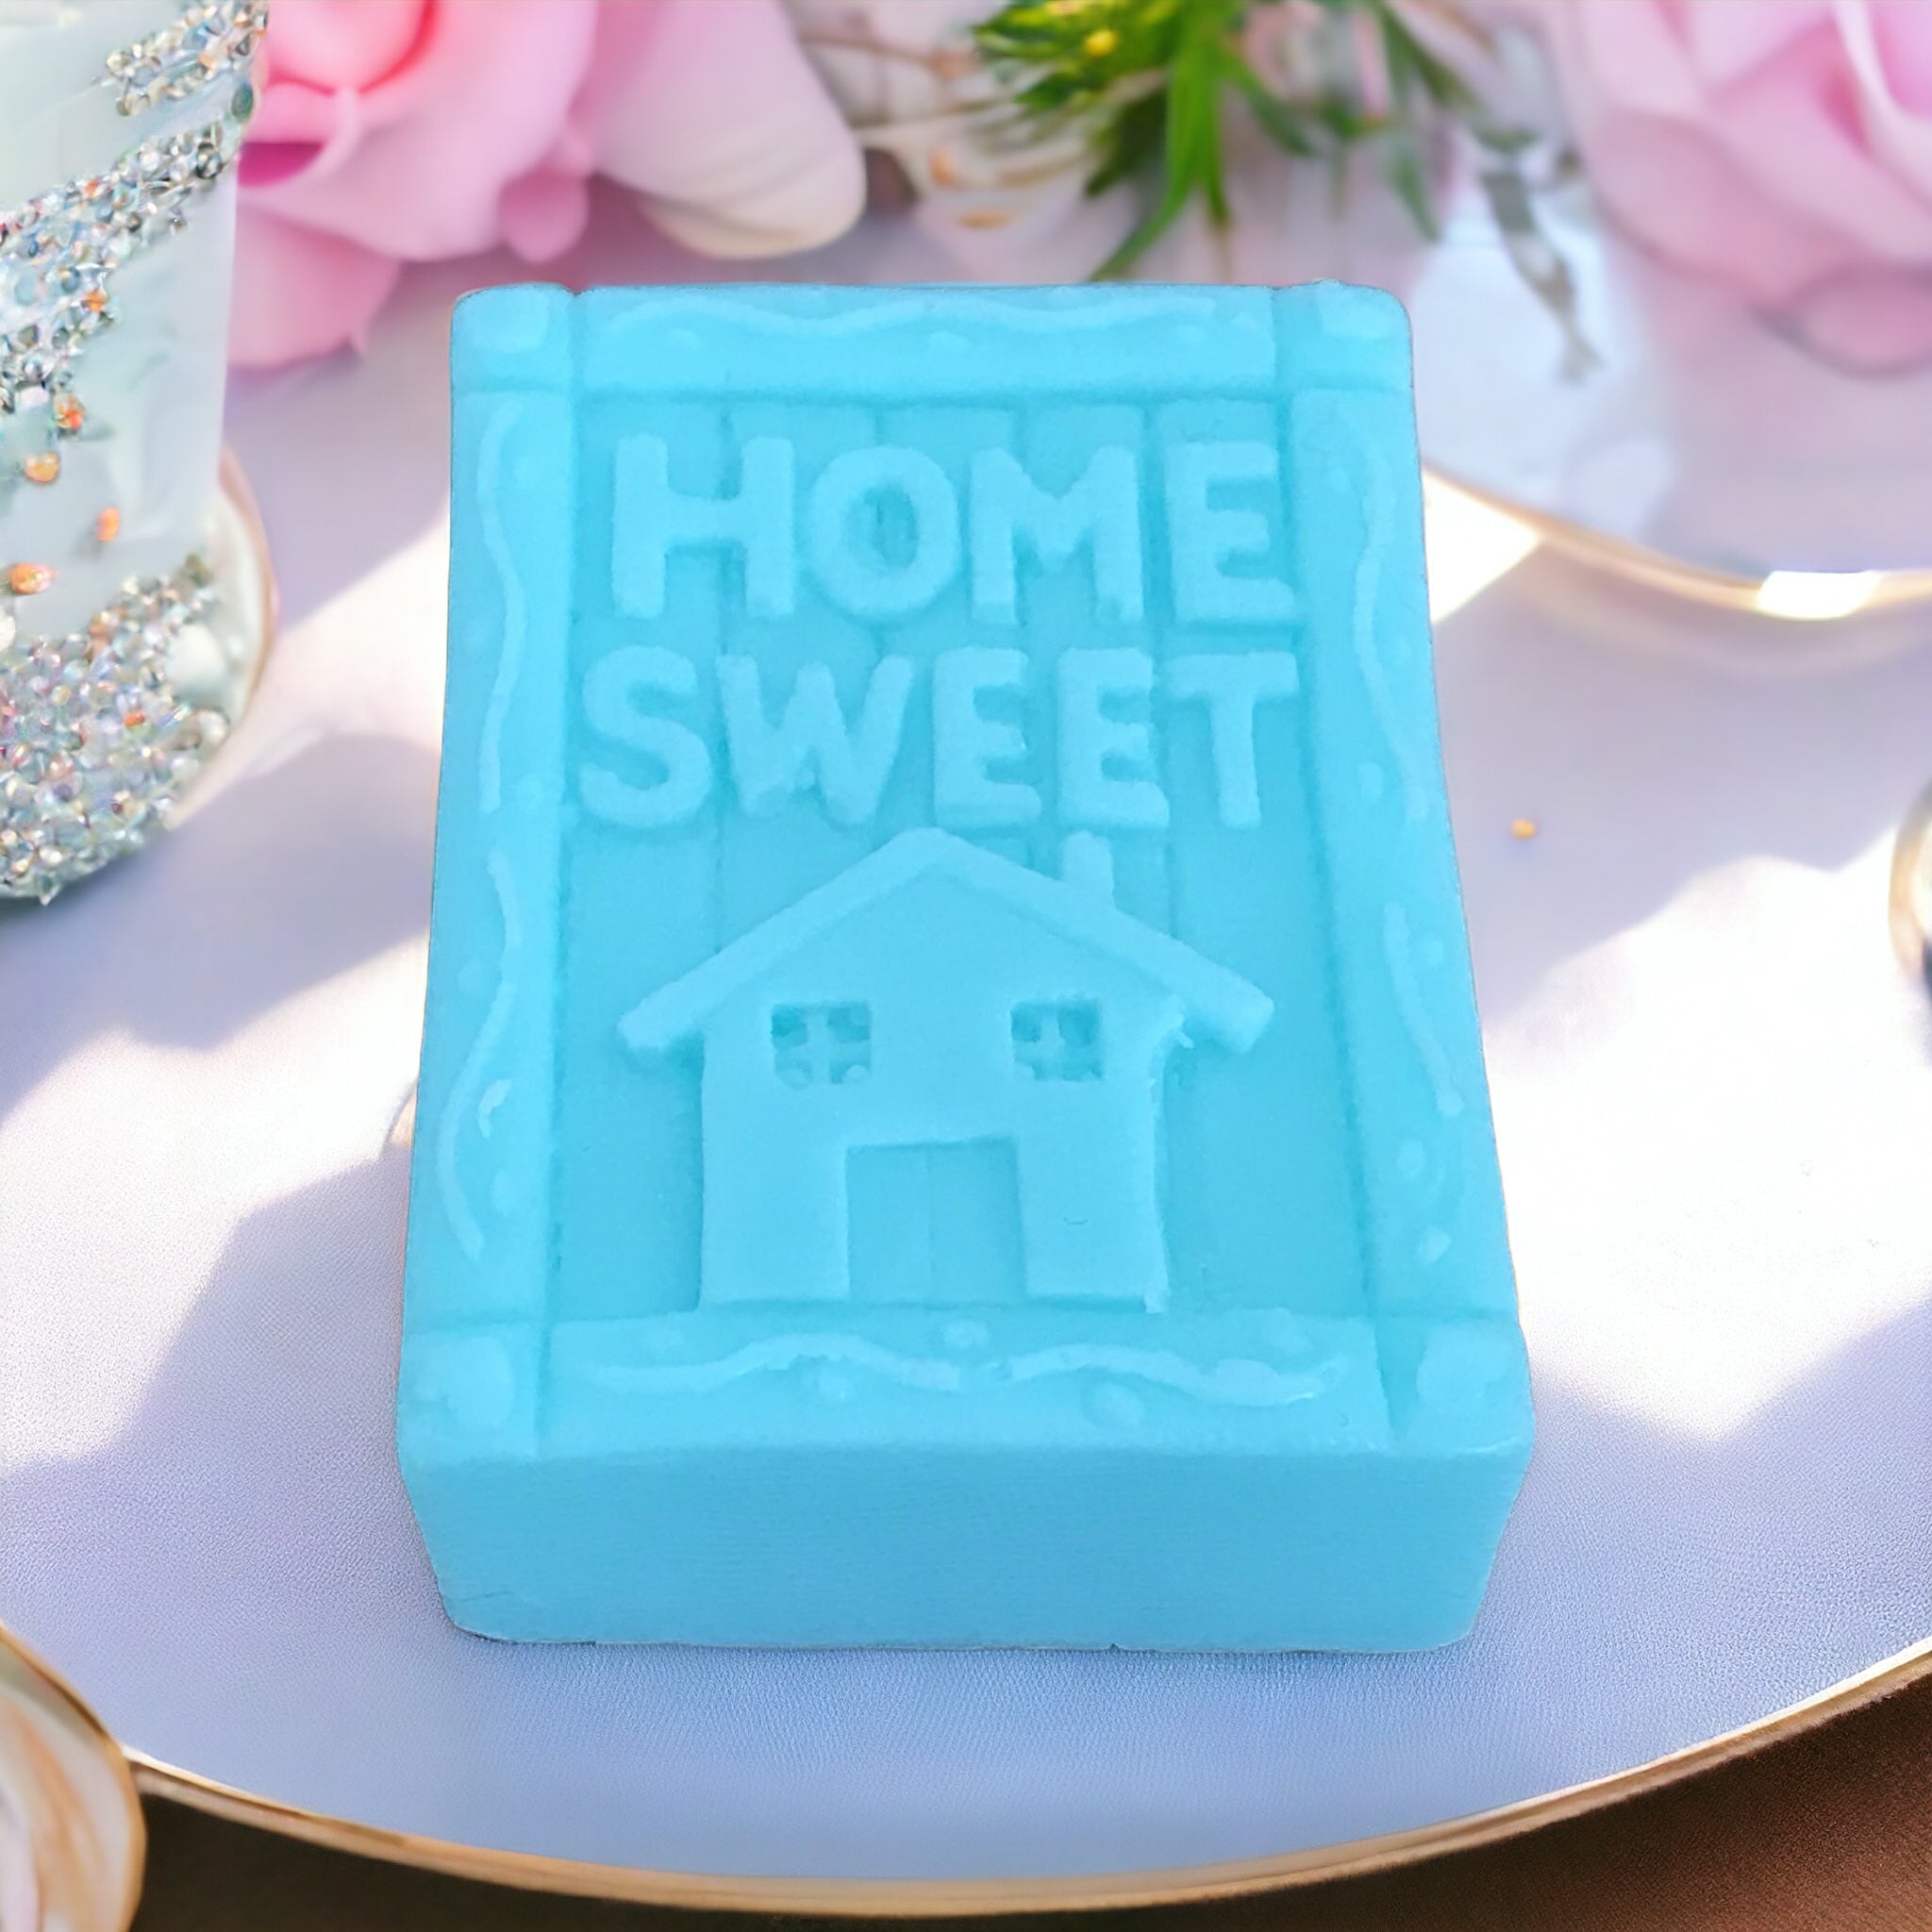 Home Sweet Home Bar Soap